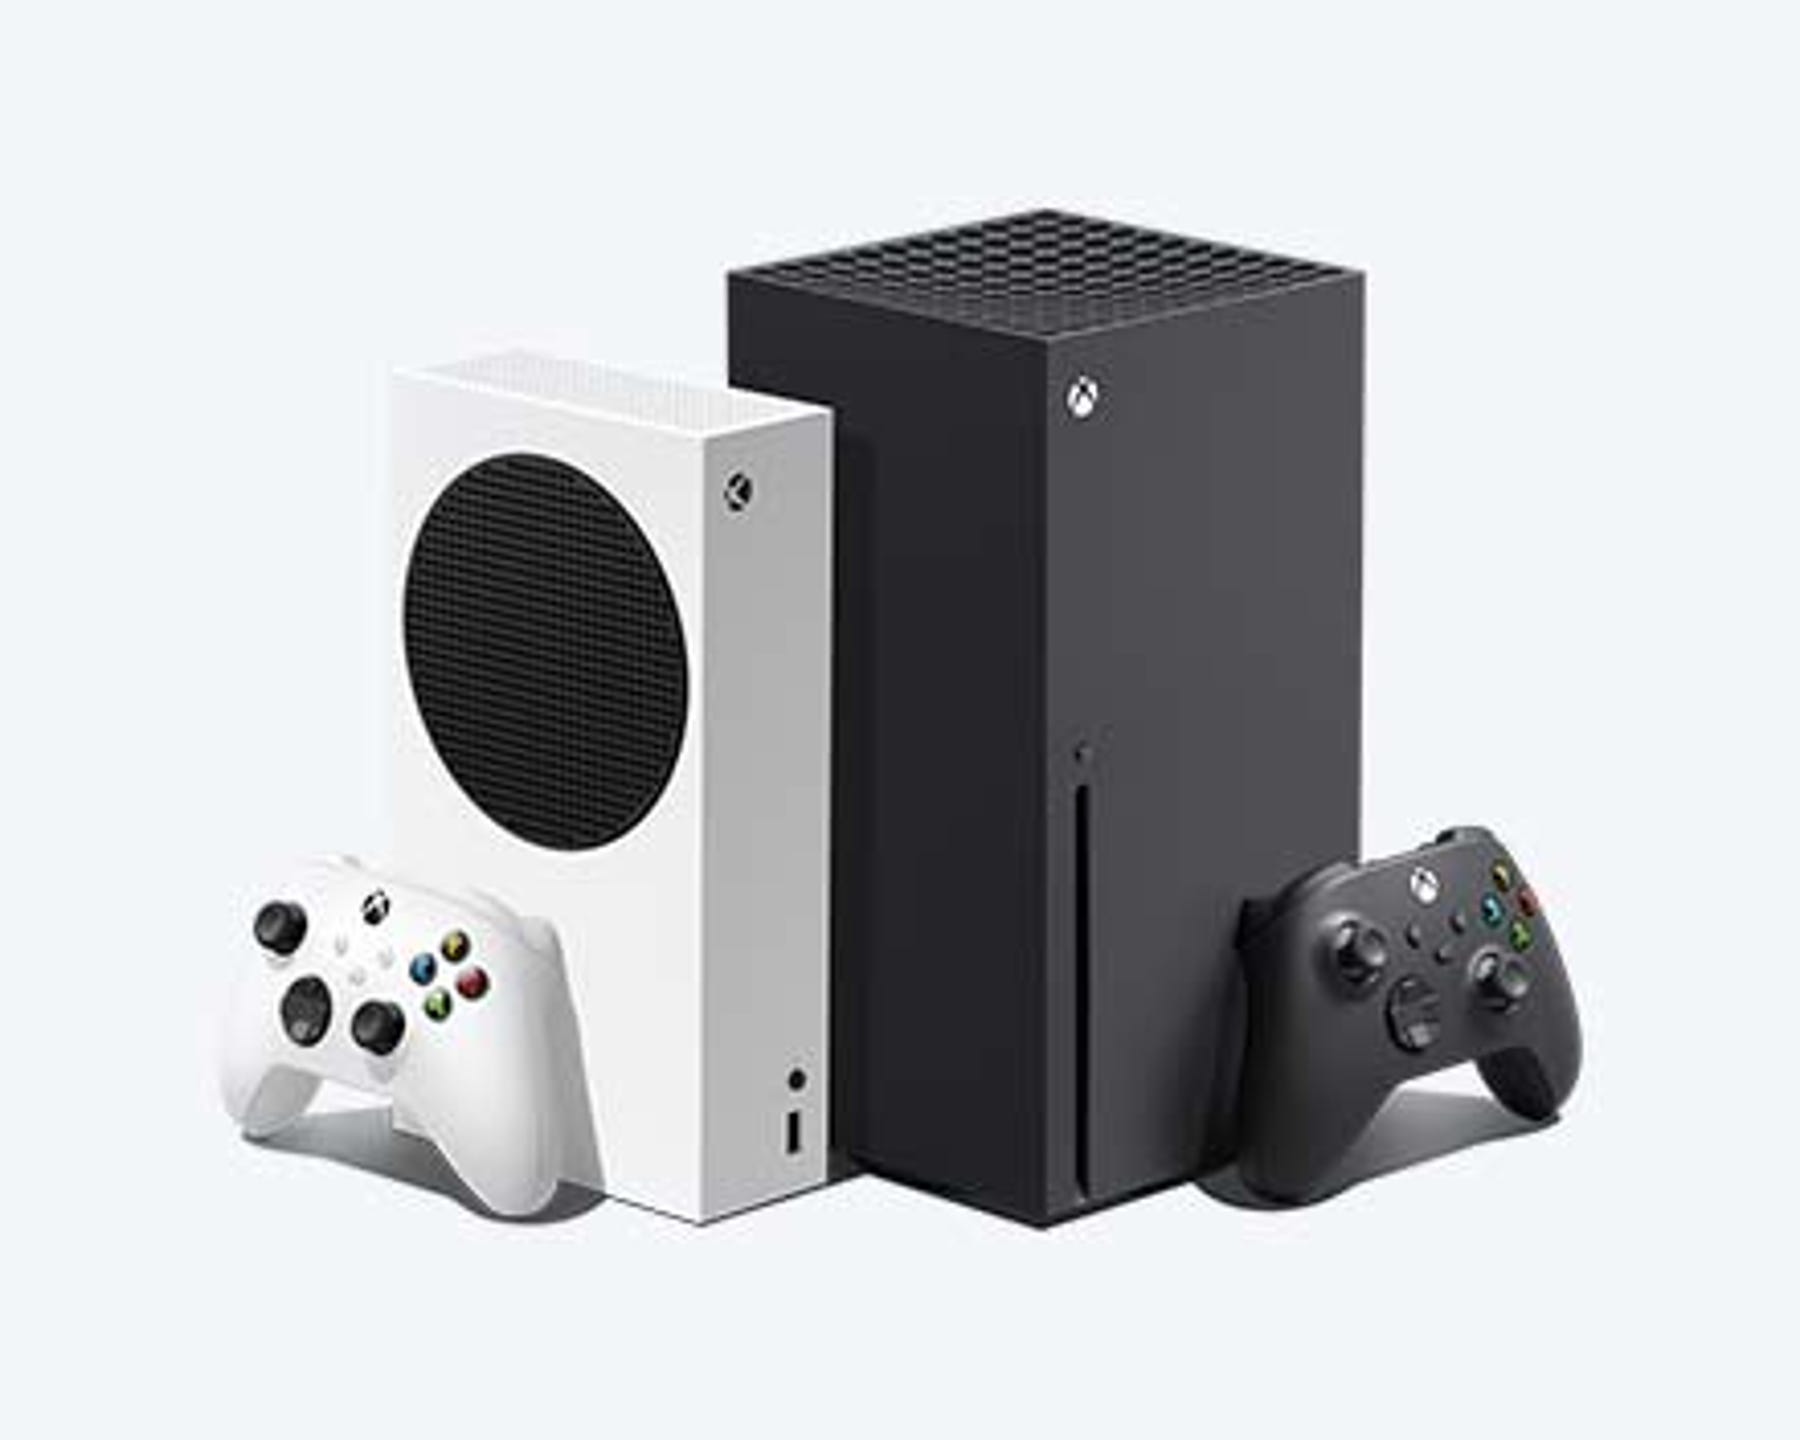 Xbox Console Controller Games Best Buy Canada - 4500 pieces robux pour roblox xbox one telechargement numerique best buy canada